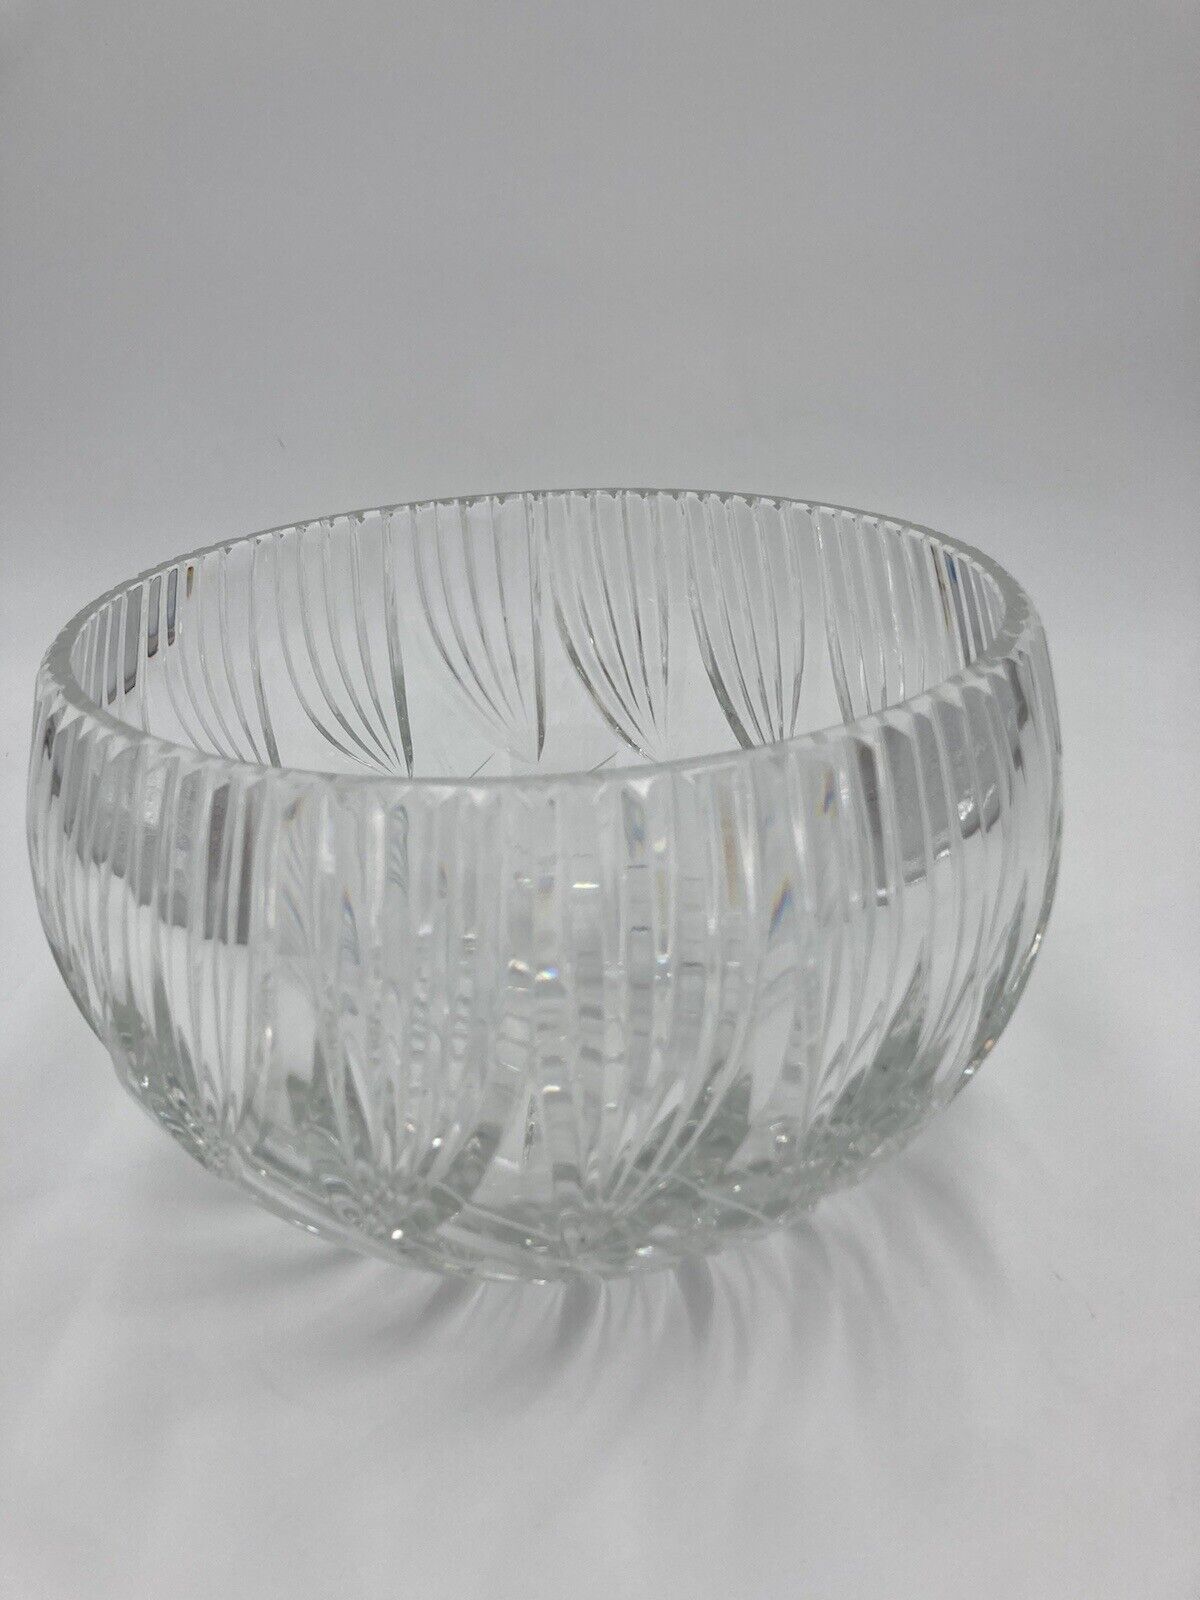 Large Vintage Clear Heavy Lead Crystal Bowl Vertical Swirl Cut Pattern 7”